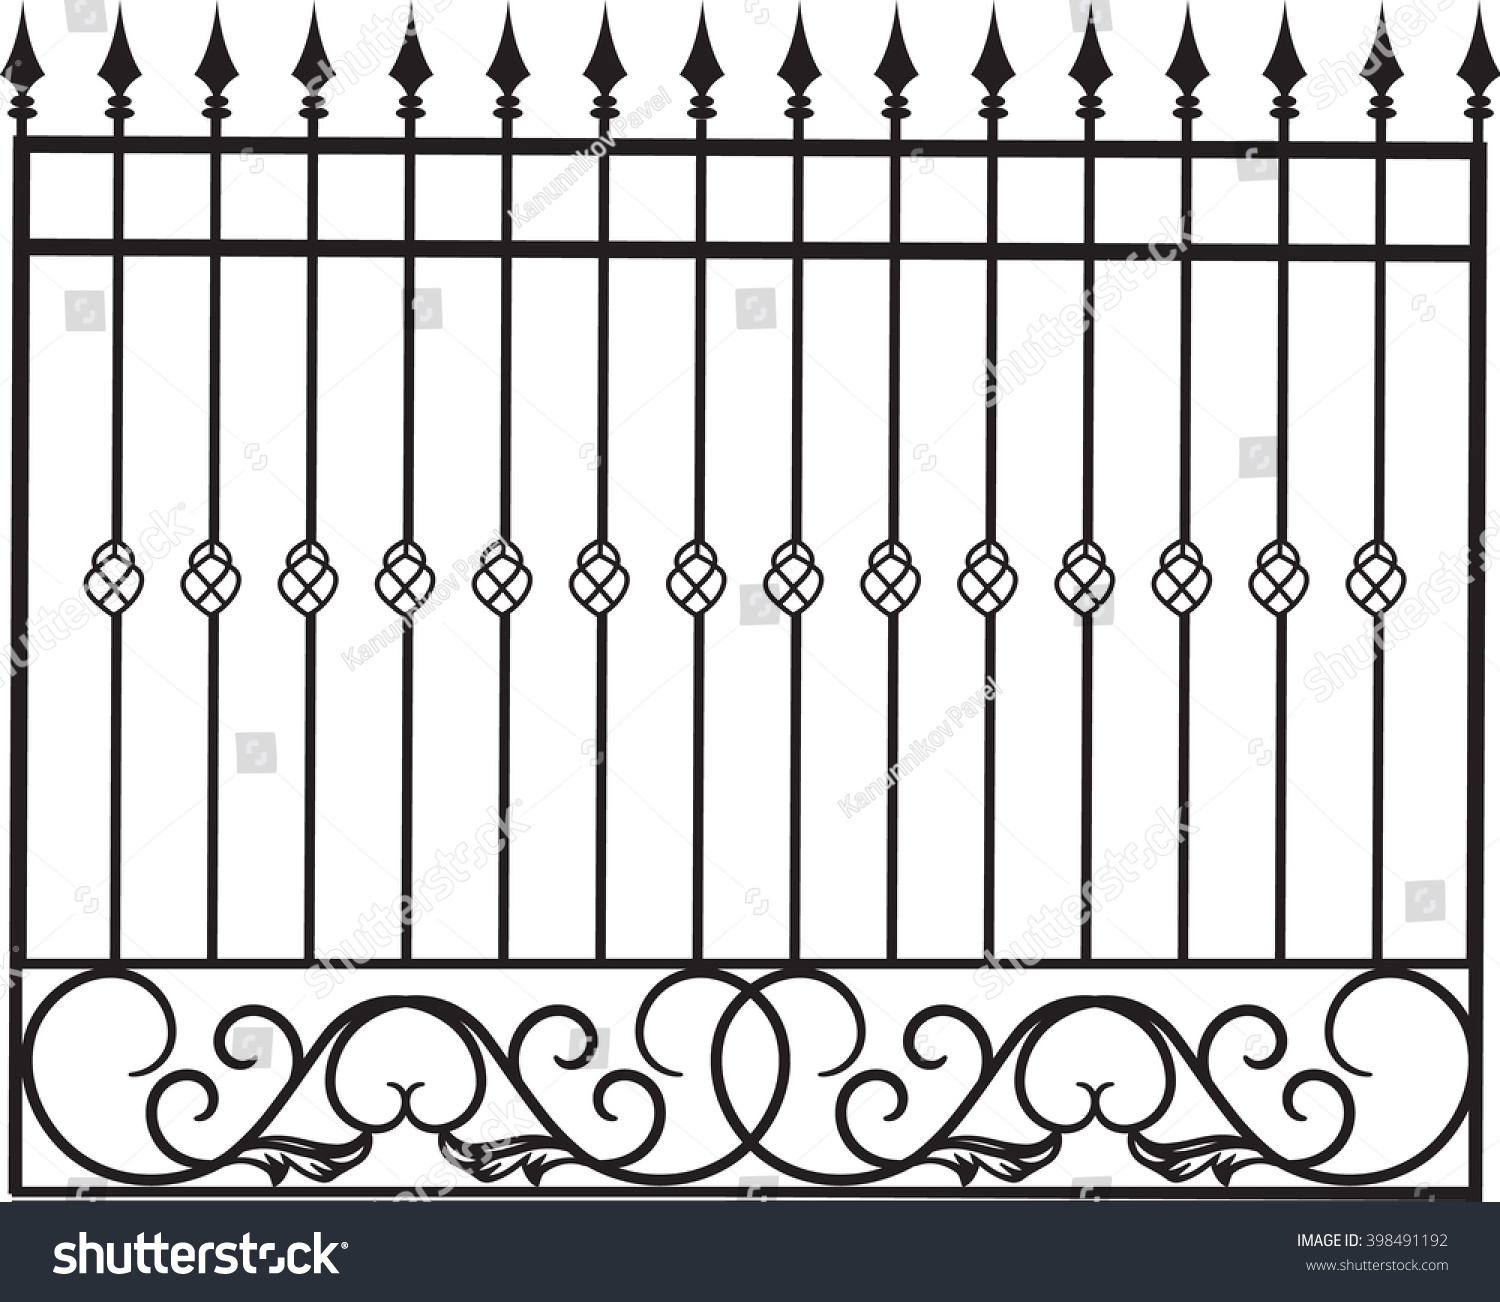 Vector Iron Fence - 398491192 : Shutterstock